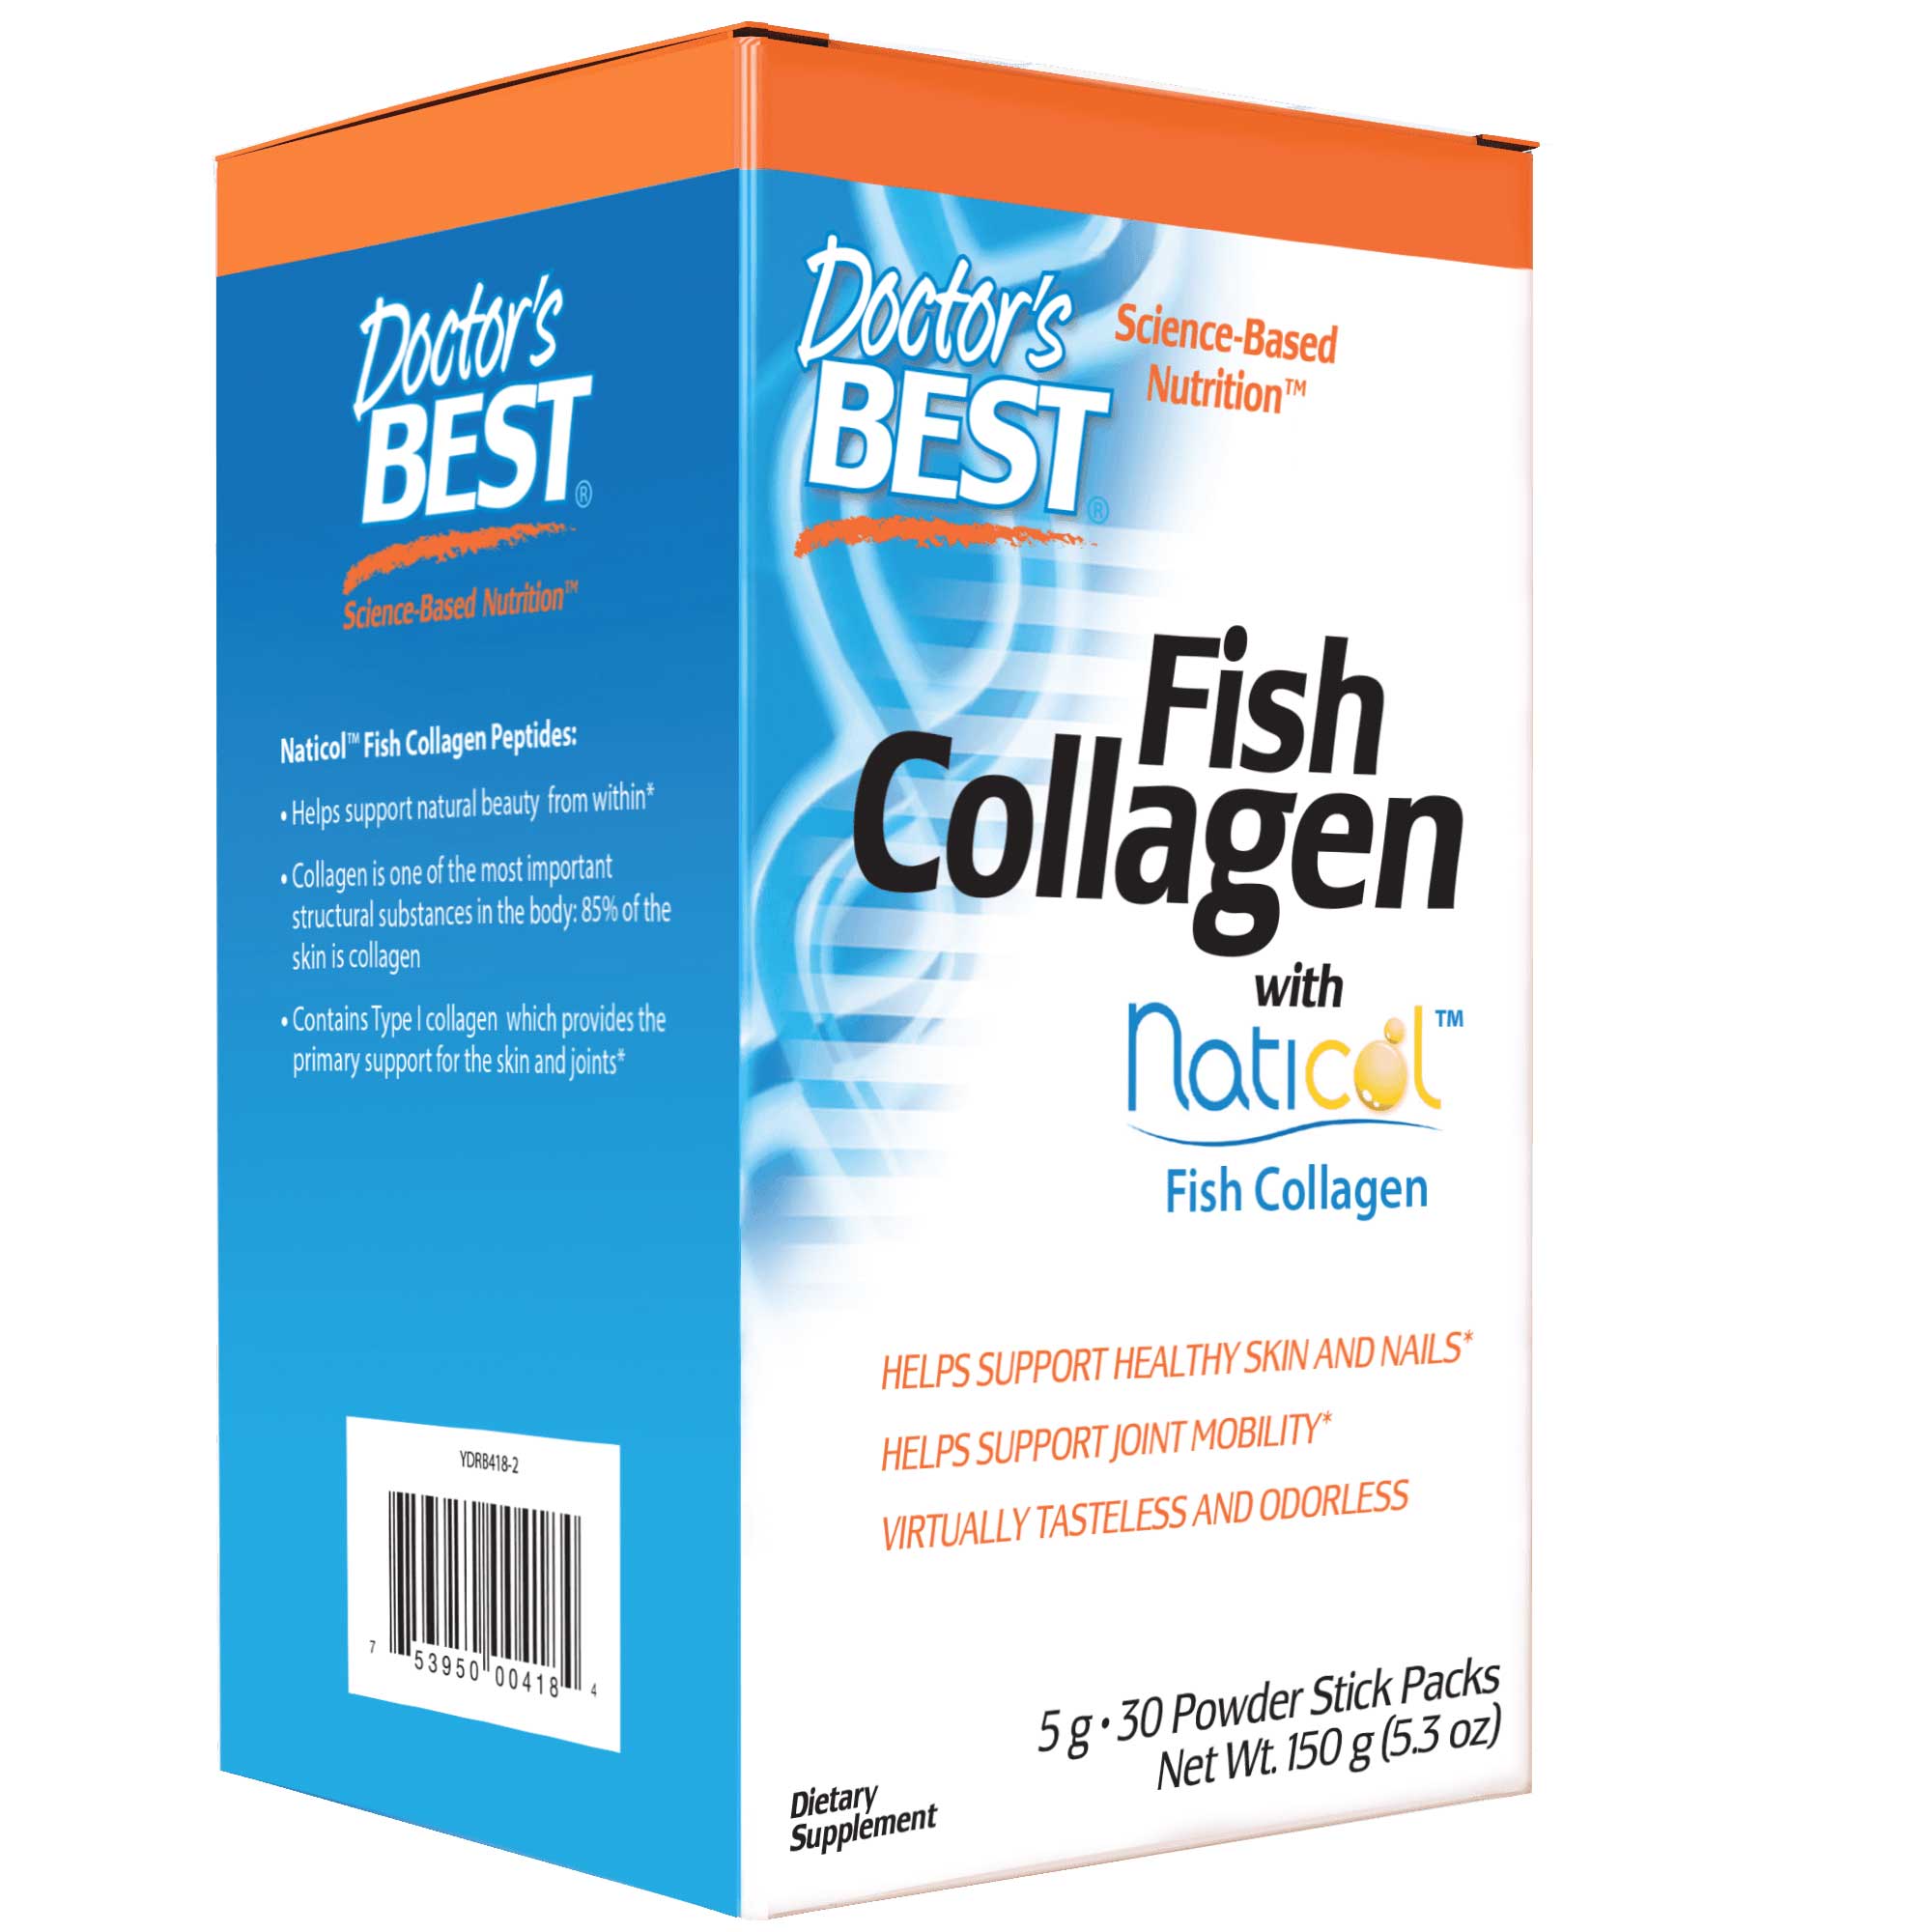 Doctor's Best Fish Collagen with Naticol Fish Collagen